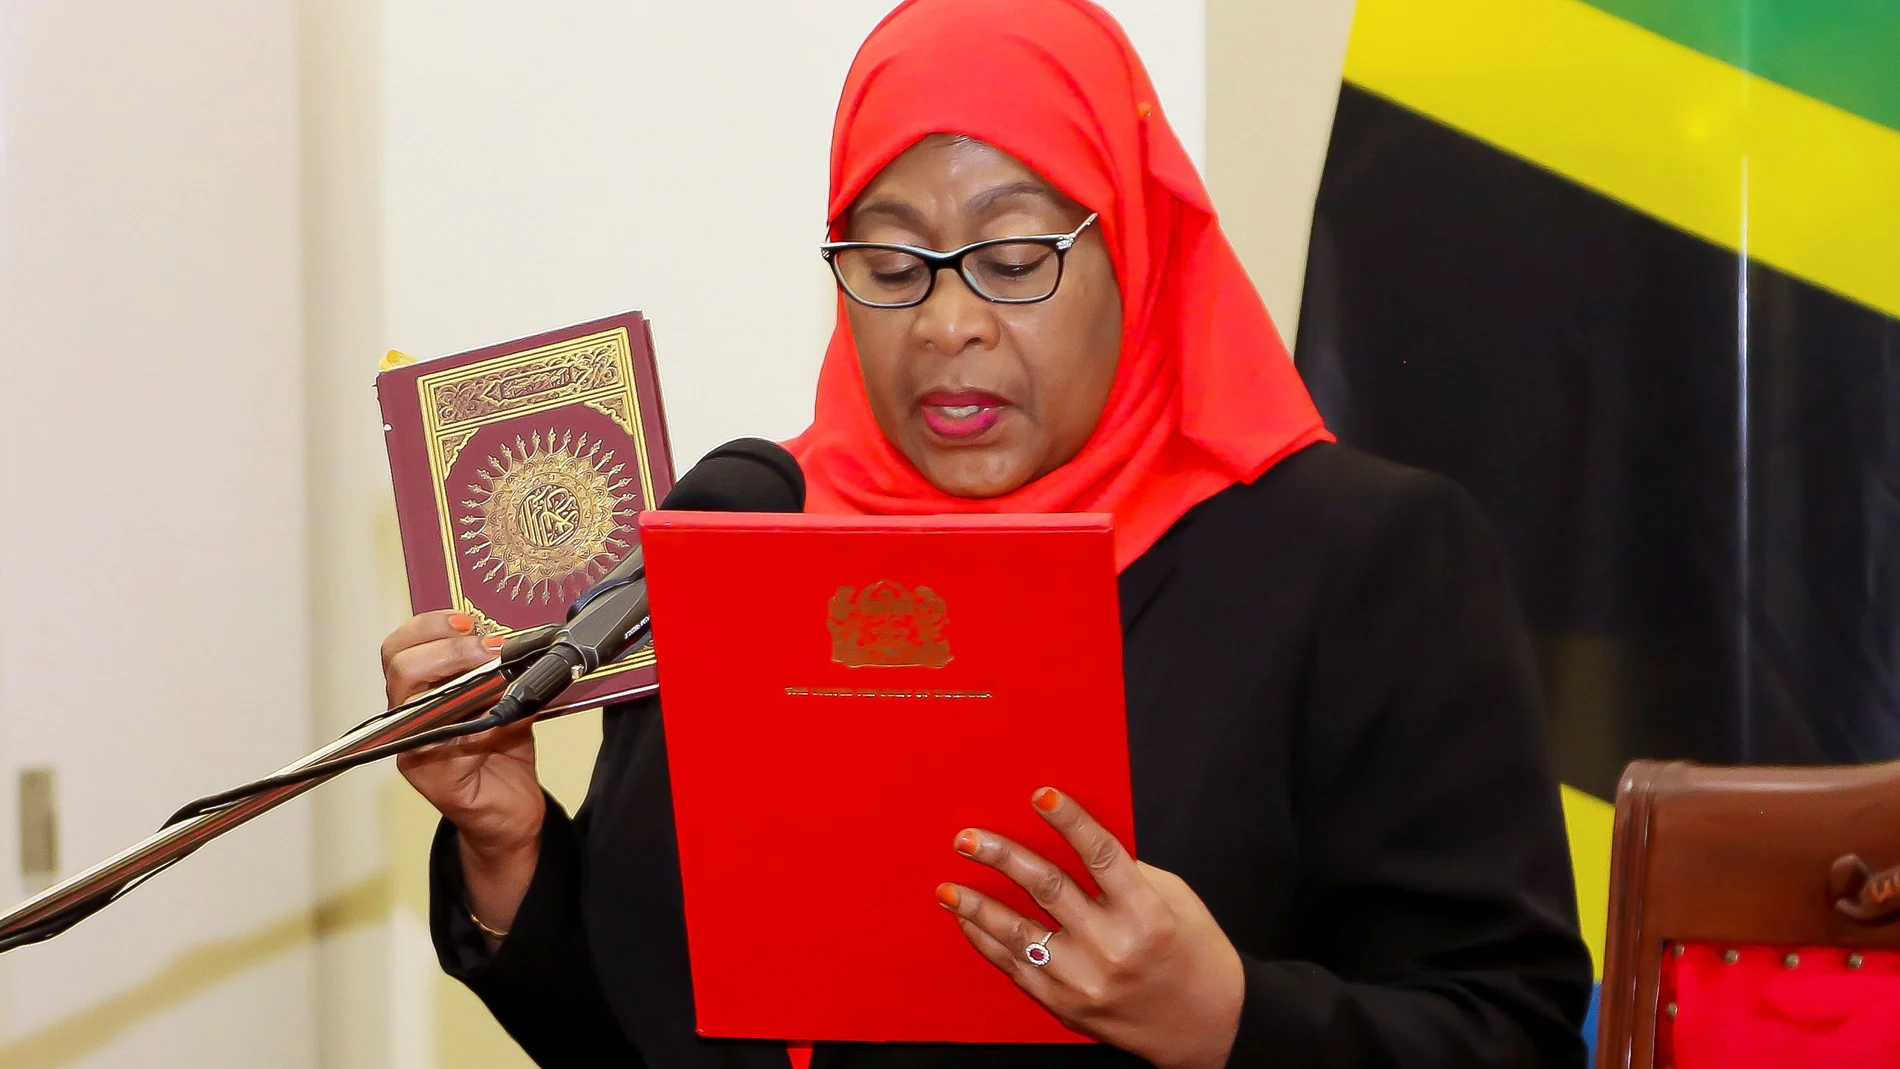 La nueva presidenta de Tanzania, Samia Suluhu Hassan, toma juramento de su cargo